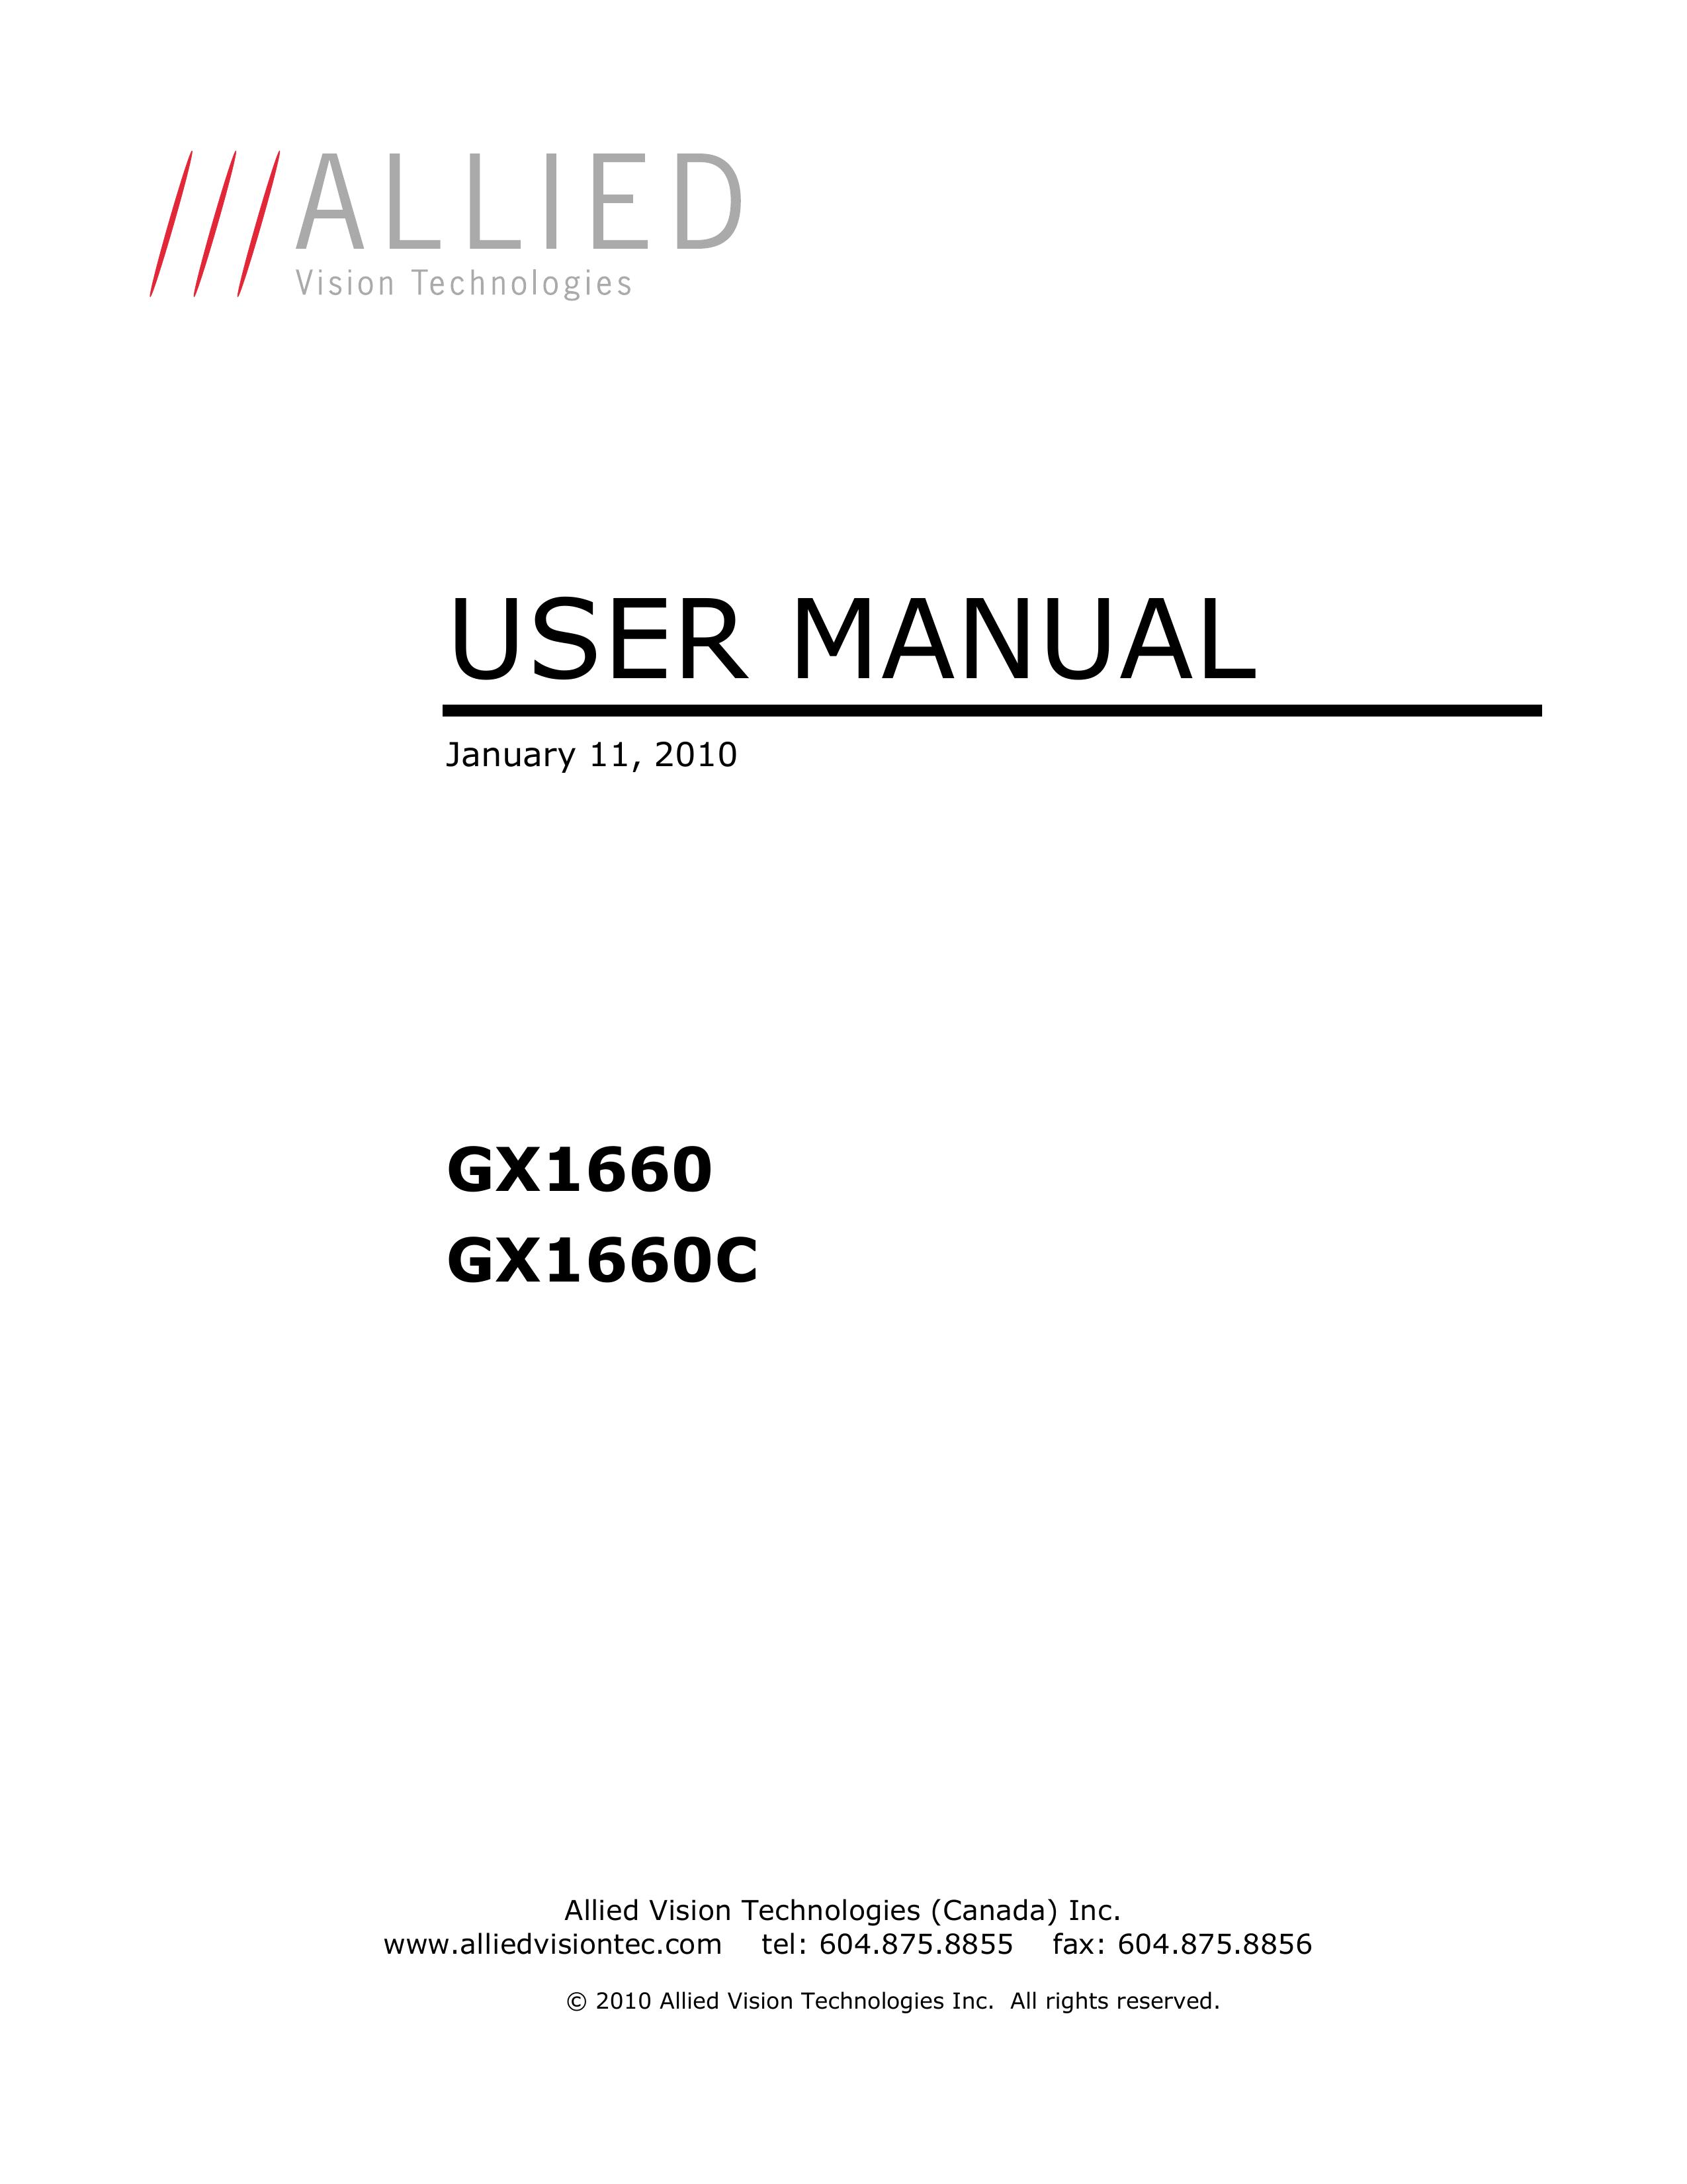 Allied International GX1660C Digital Camera User Manual (Page 1)